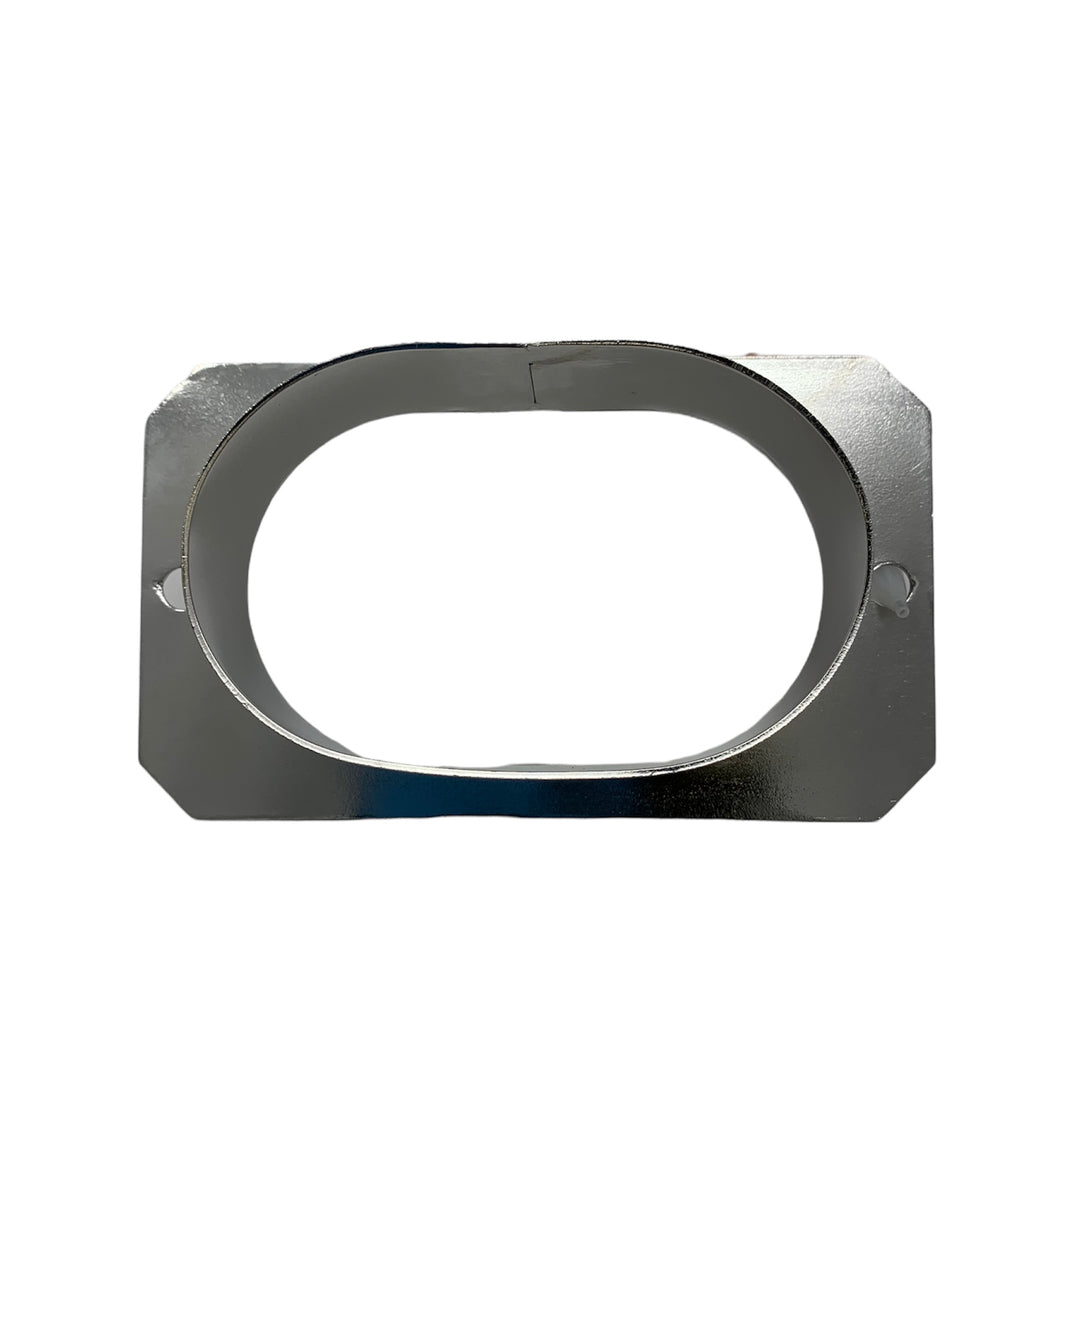 4" Stainless Steel Flue Collar